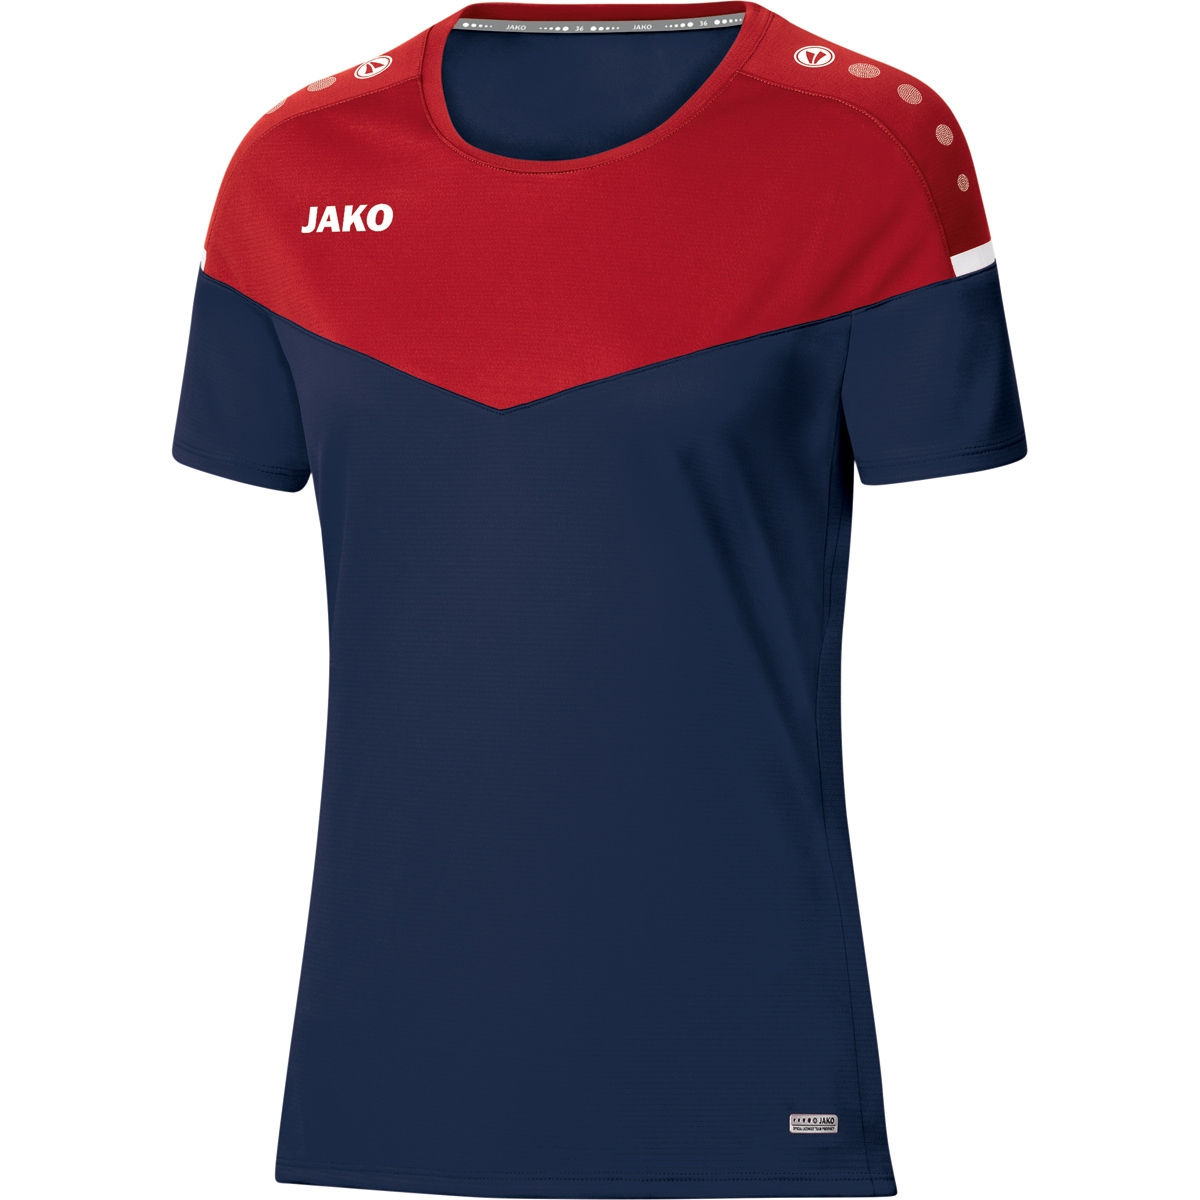 JAKO T-Shirt Champ Damen, 2.0 rot, Gr. 42, marine/chili 6120